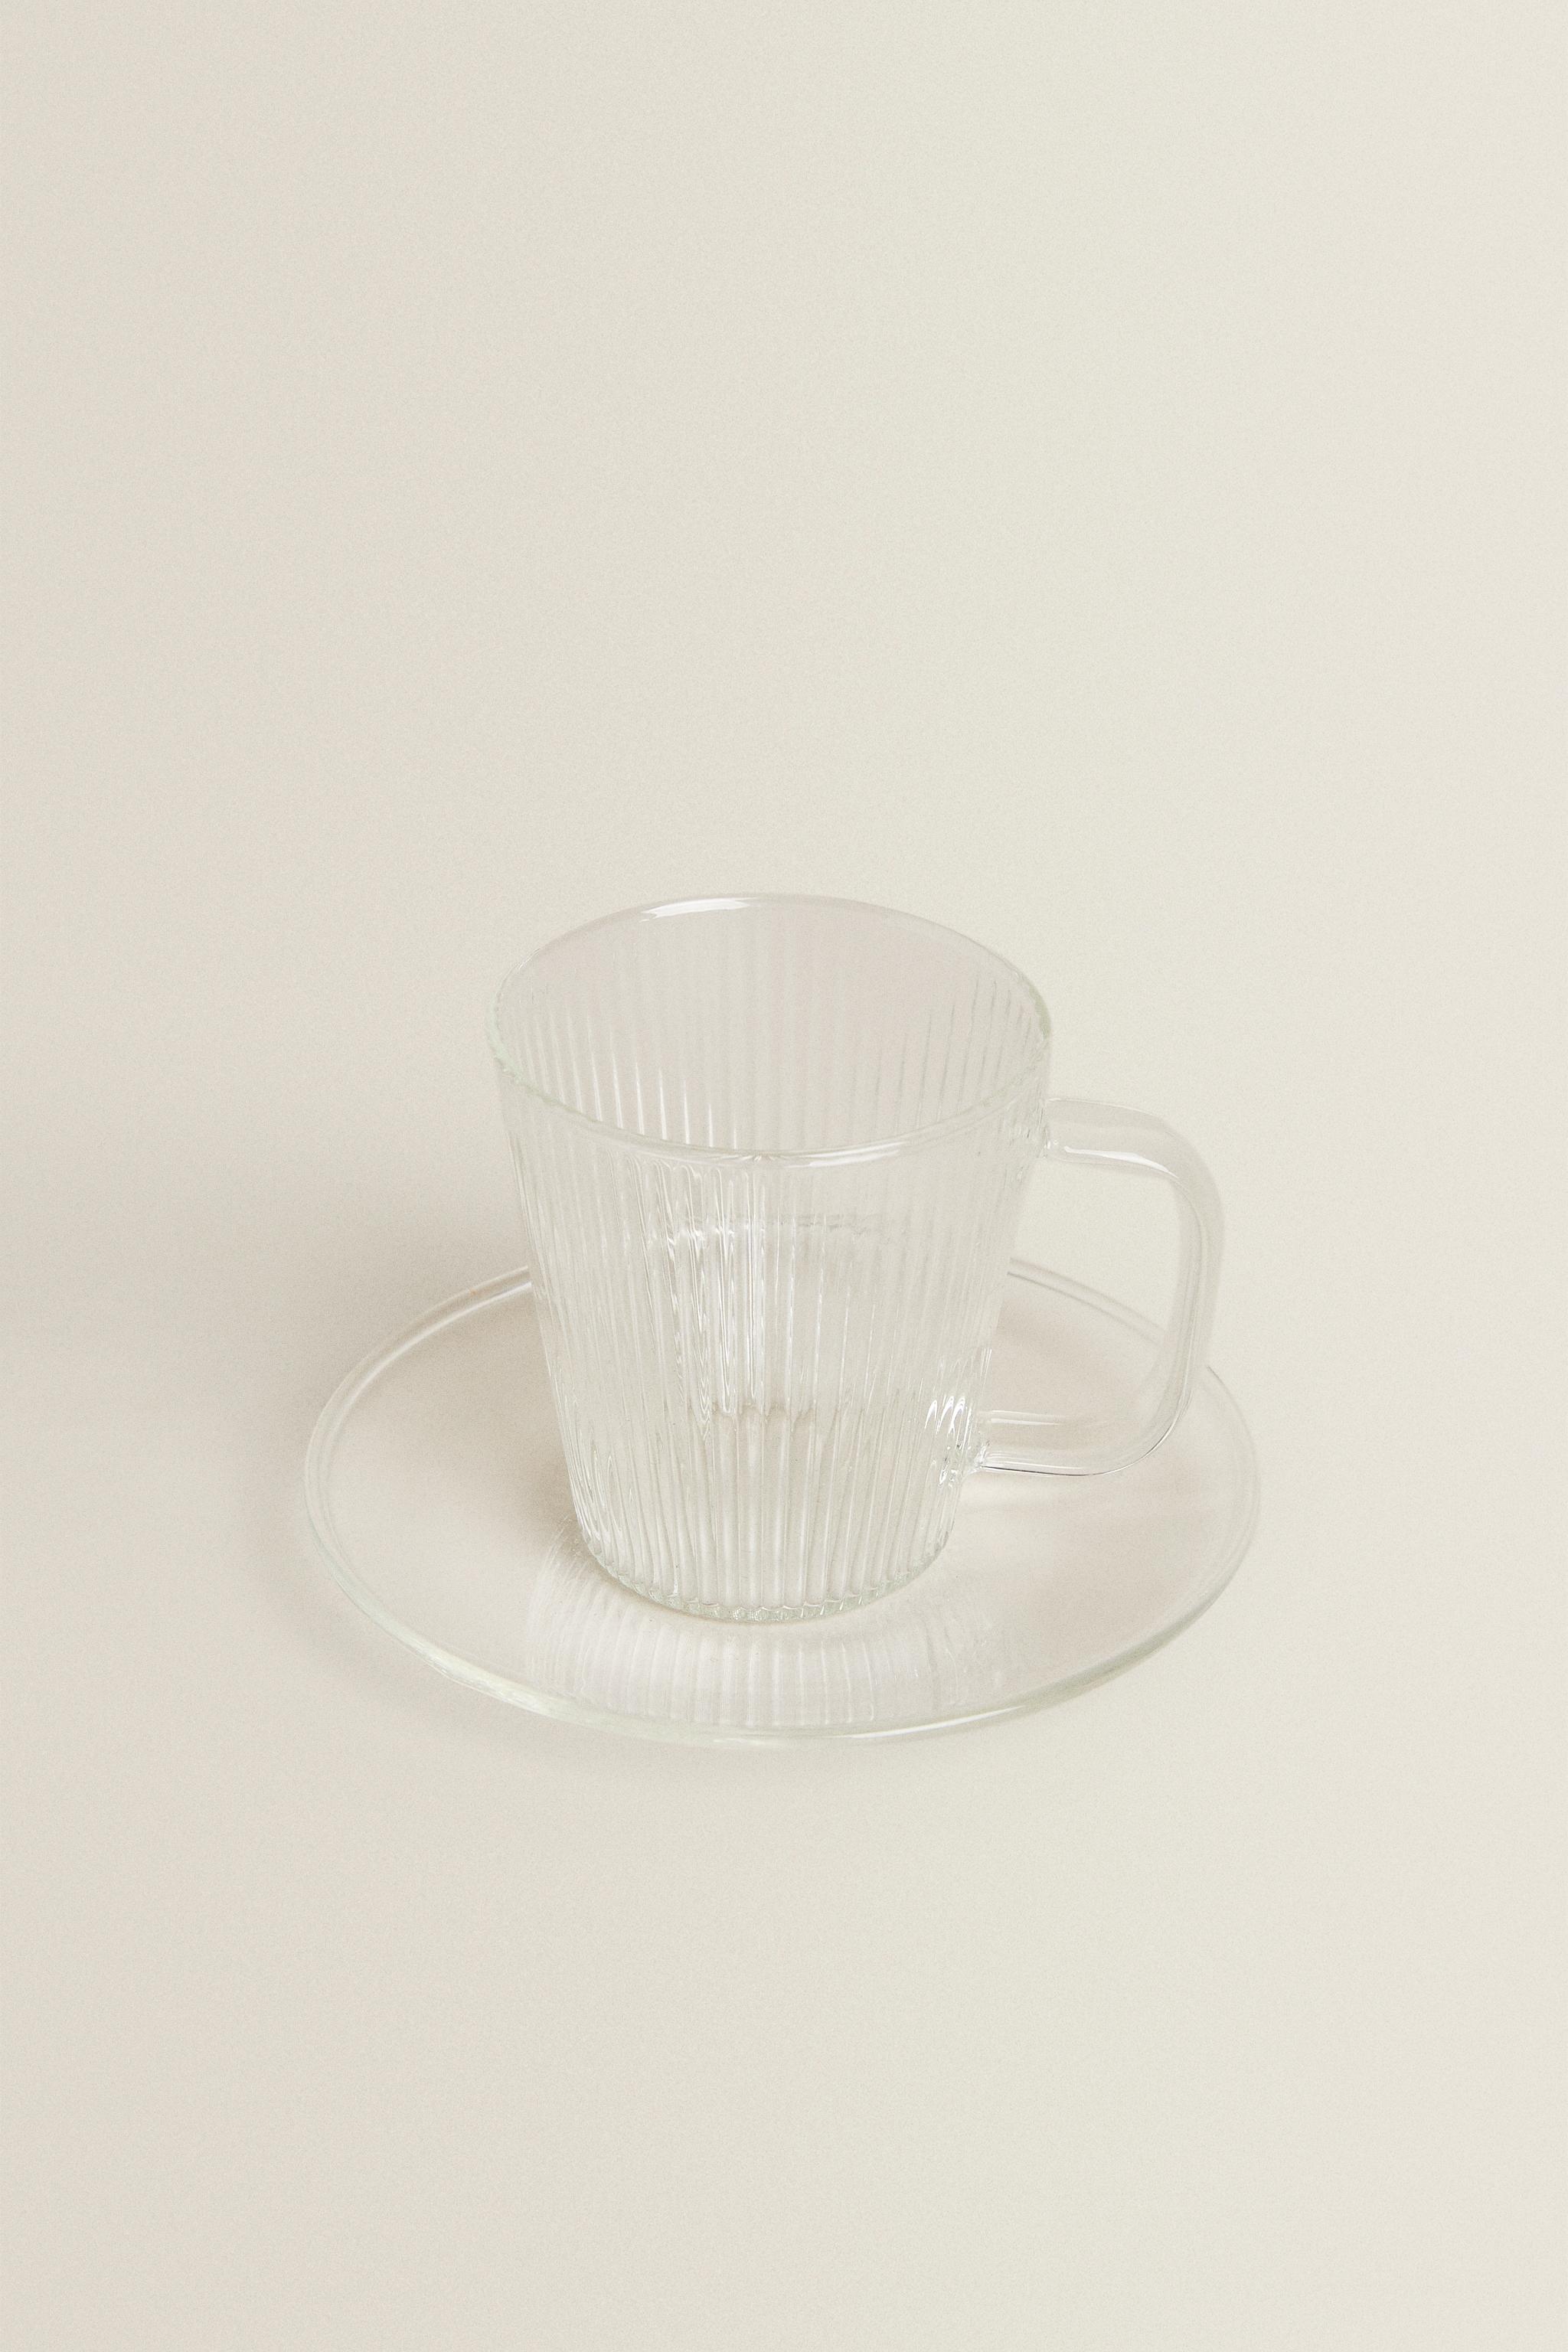 Taza zaara fucsia, porcelana 0,35 l filtro y tapa: 17,50 €